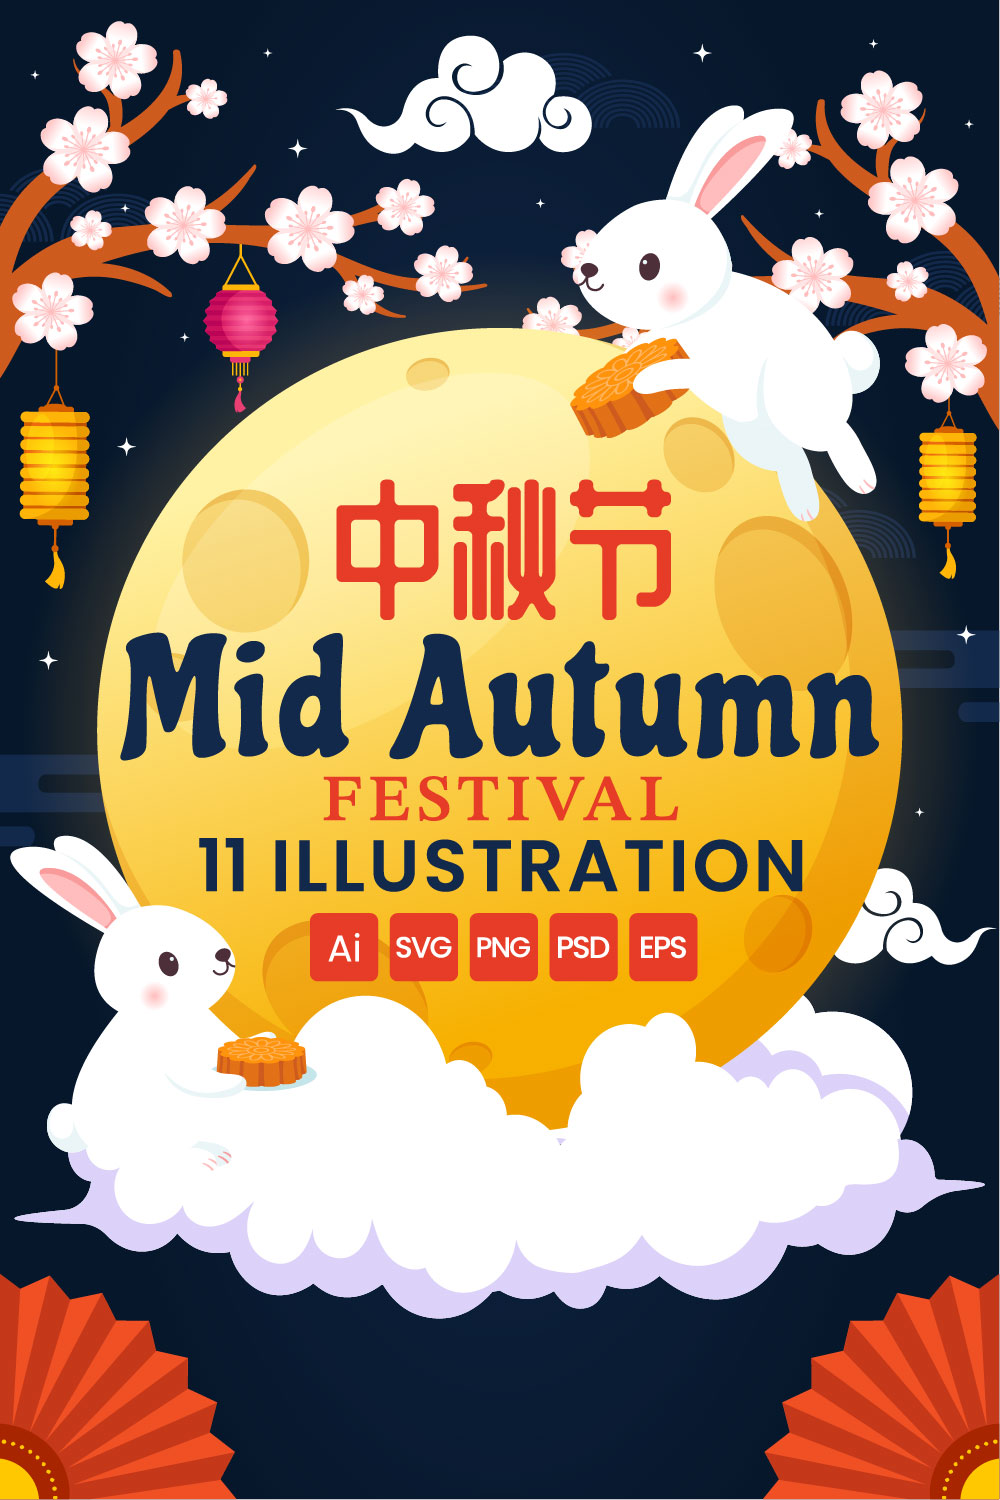 11 Happy Mid Autumn Festival Illustration pinterest preview image.